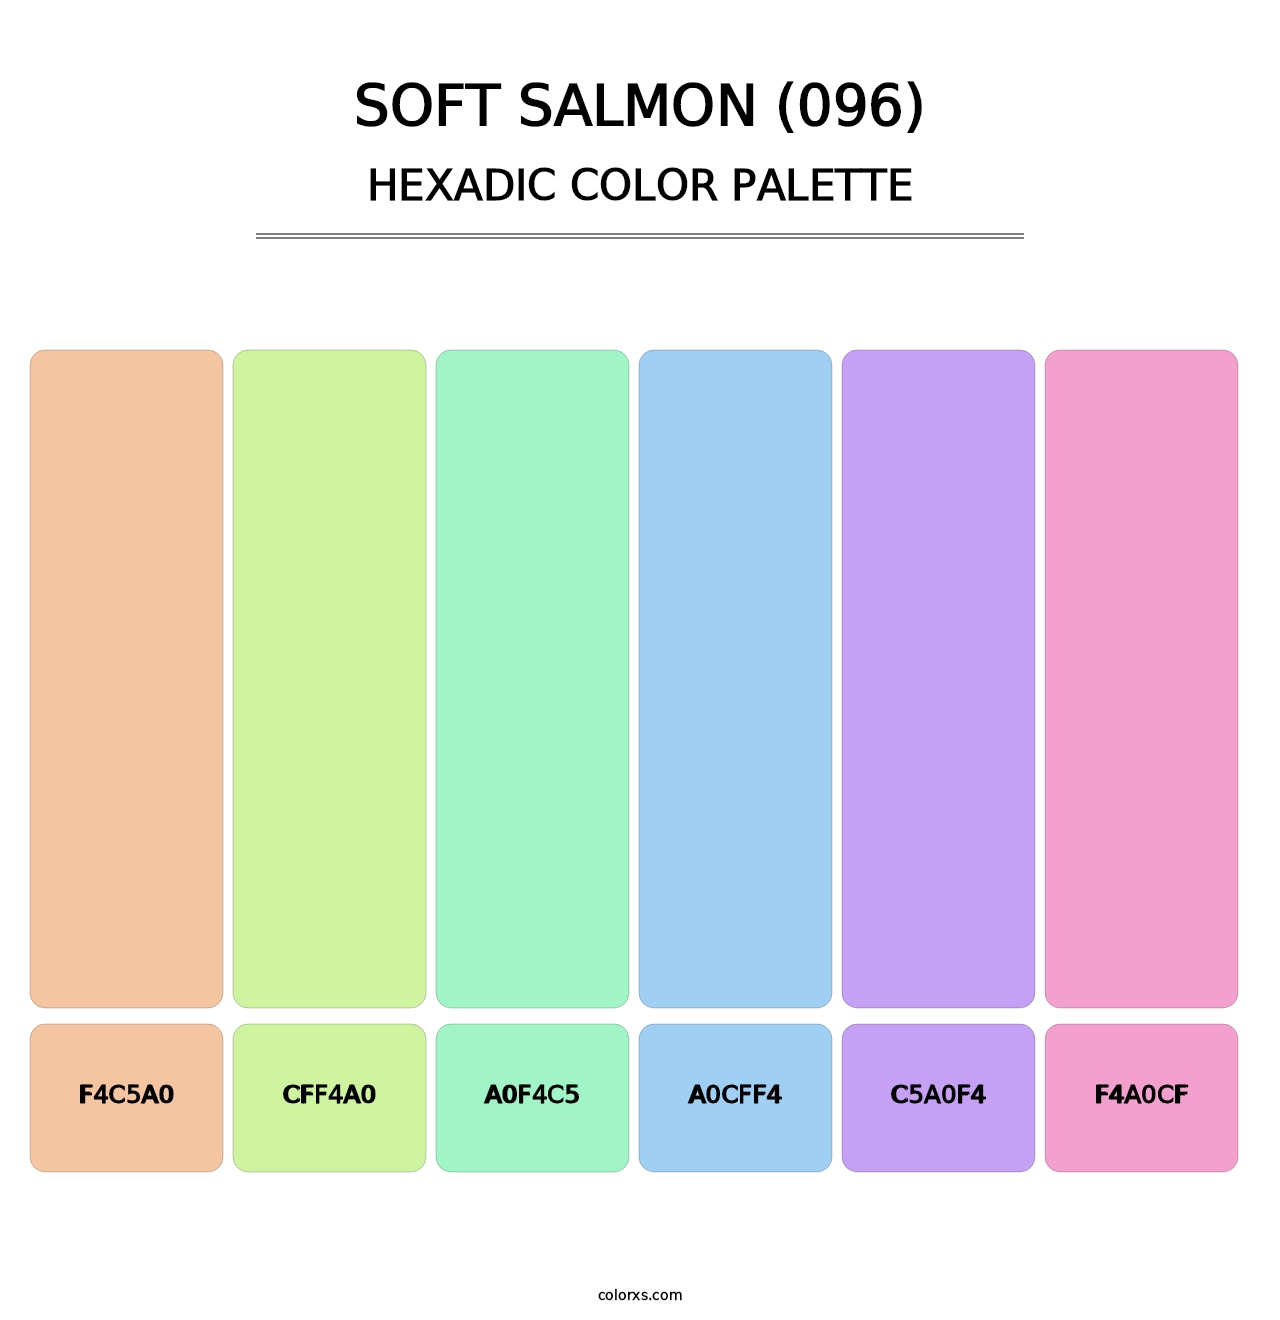 Soft Salmon (096) - Hexadic Color Palette